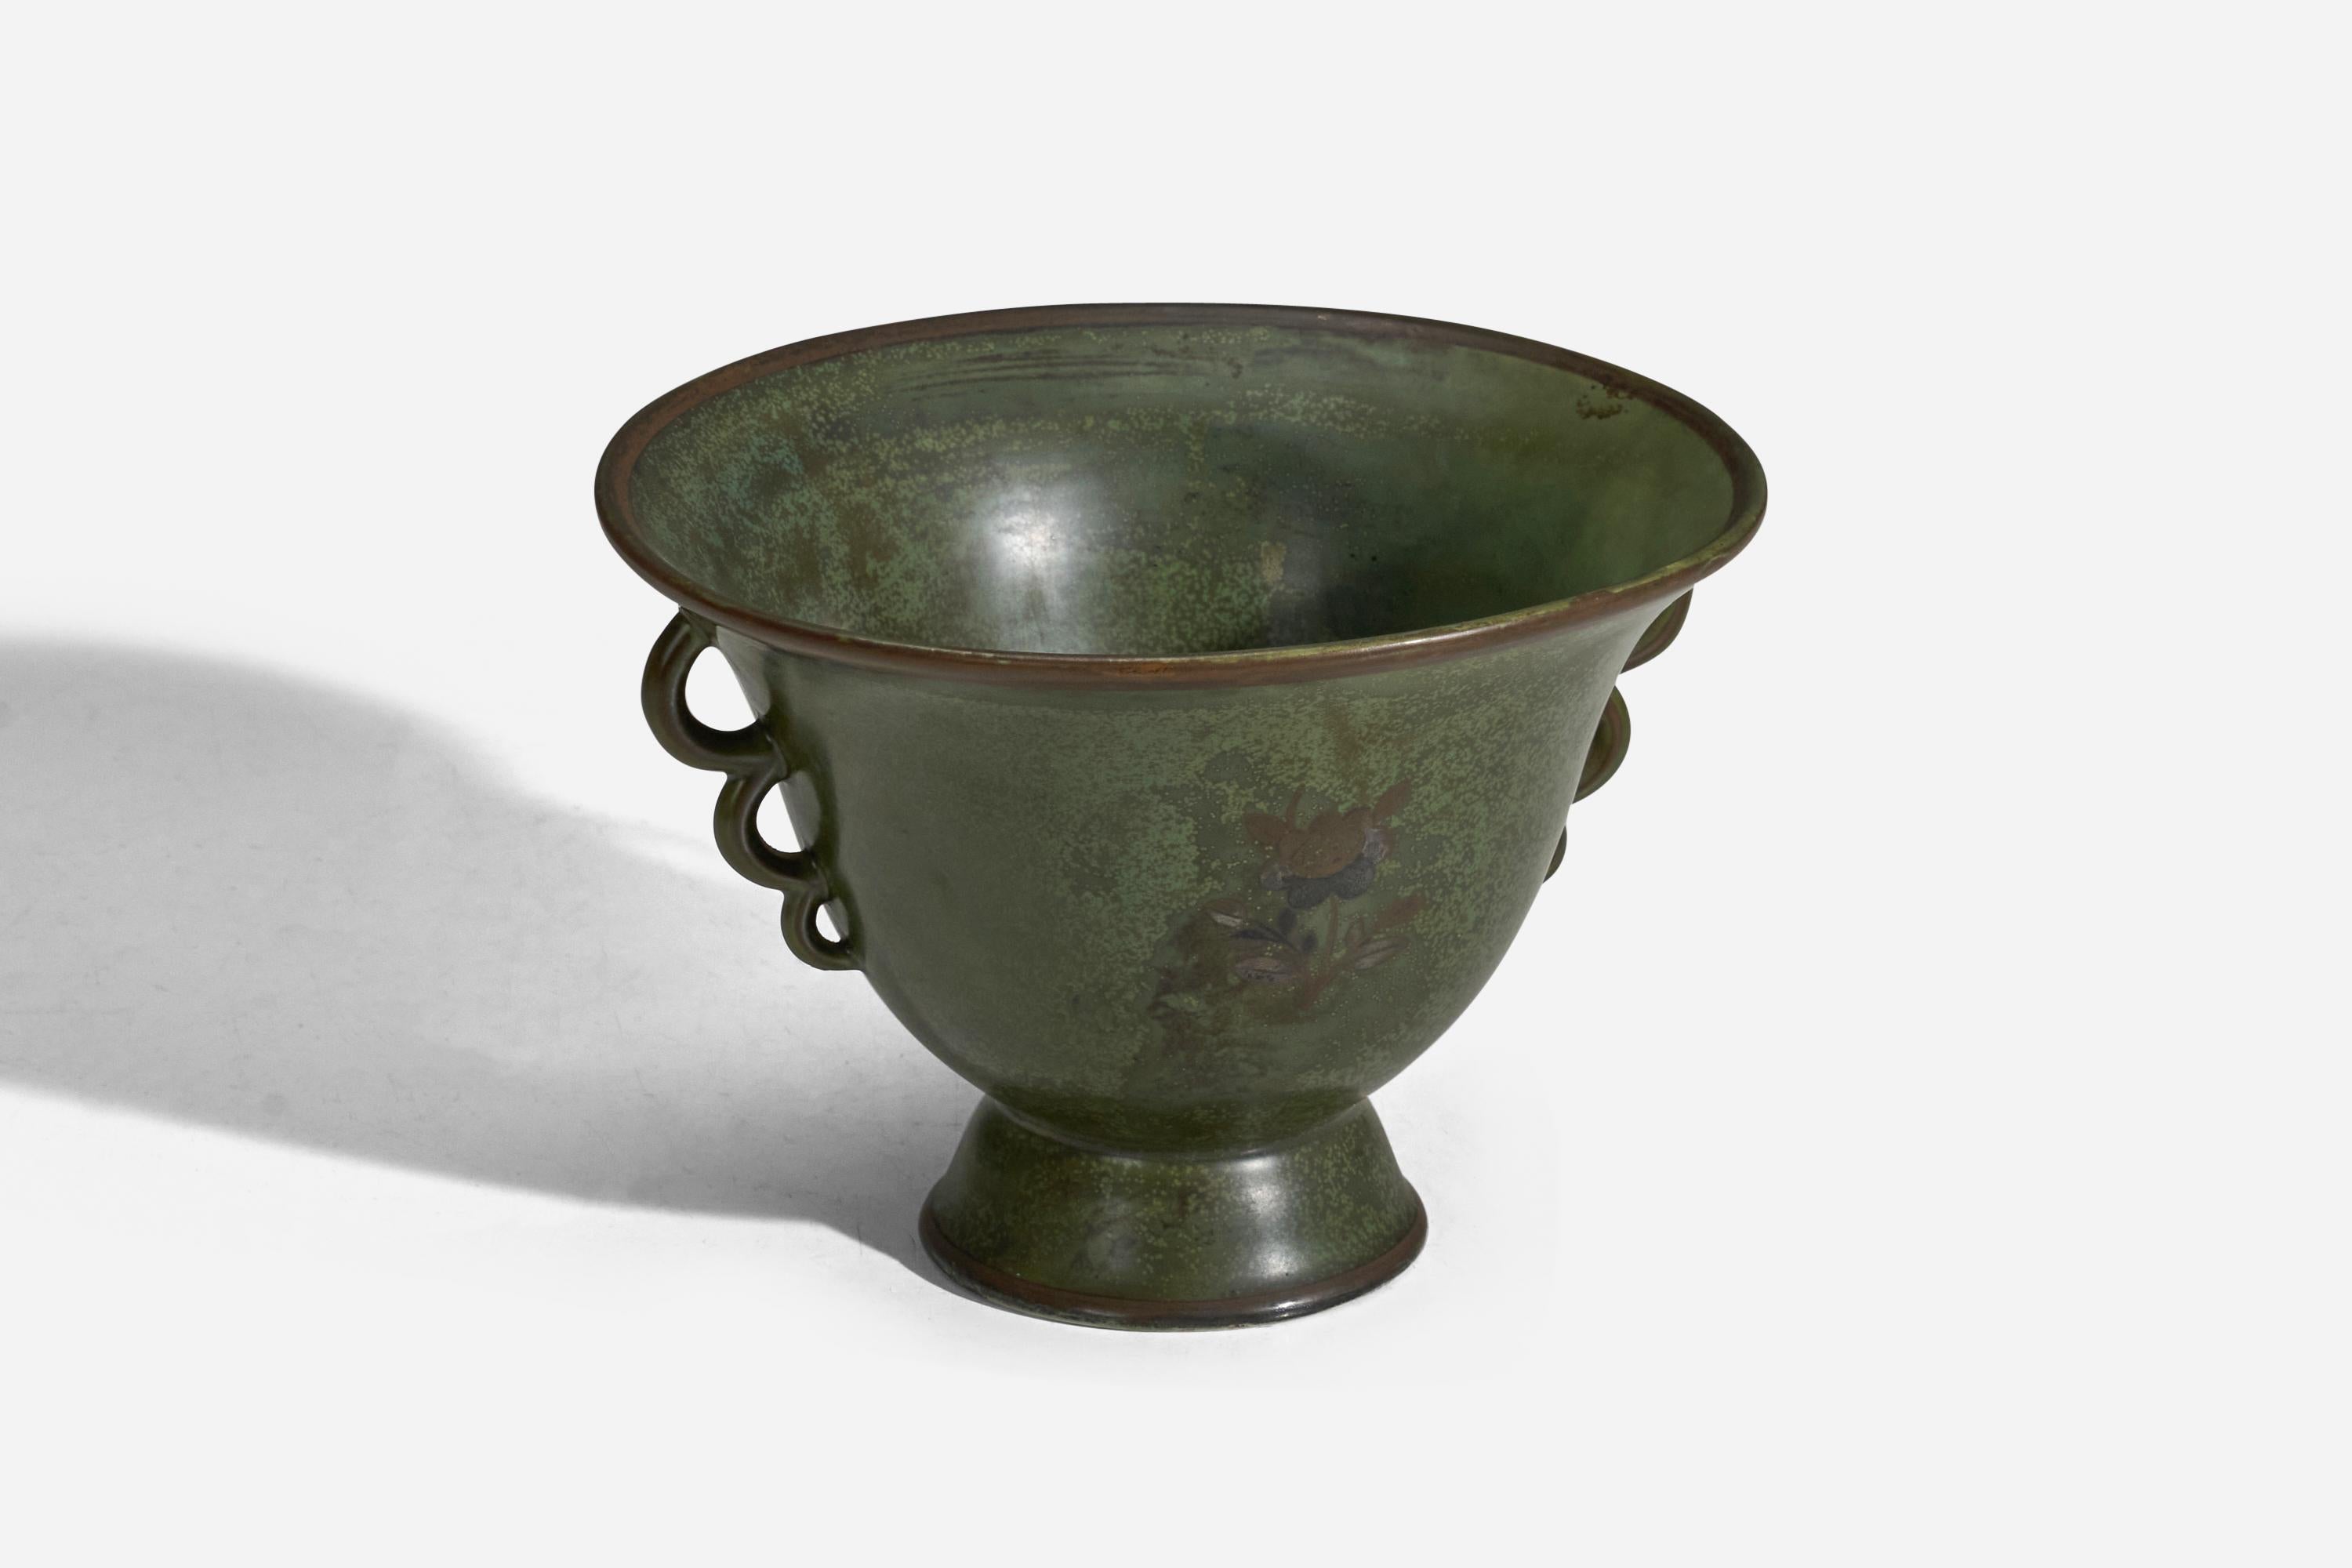 Scandinavian Modern Arabia, Vase, Green Glazed Stoneware, Finland, 1940s